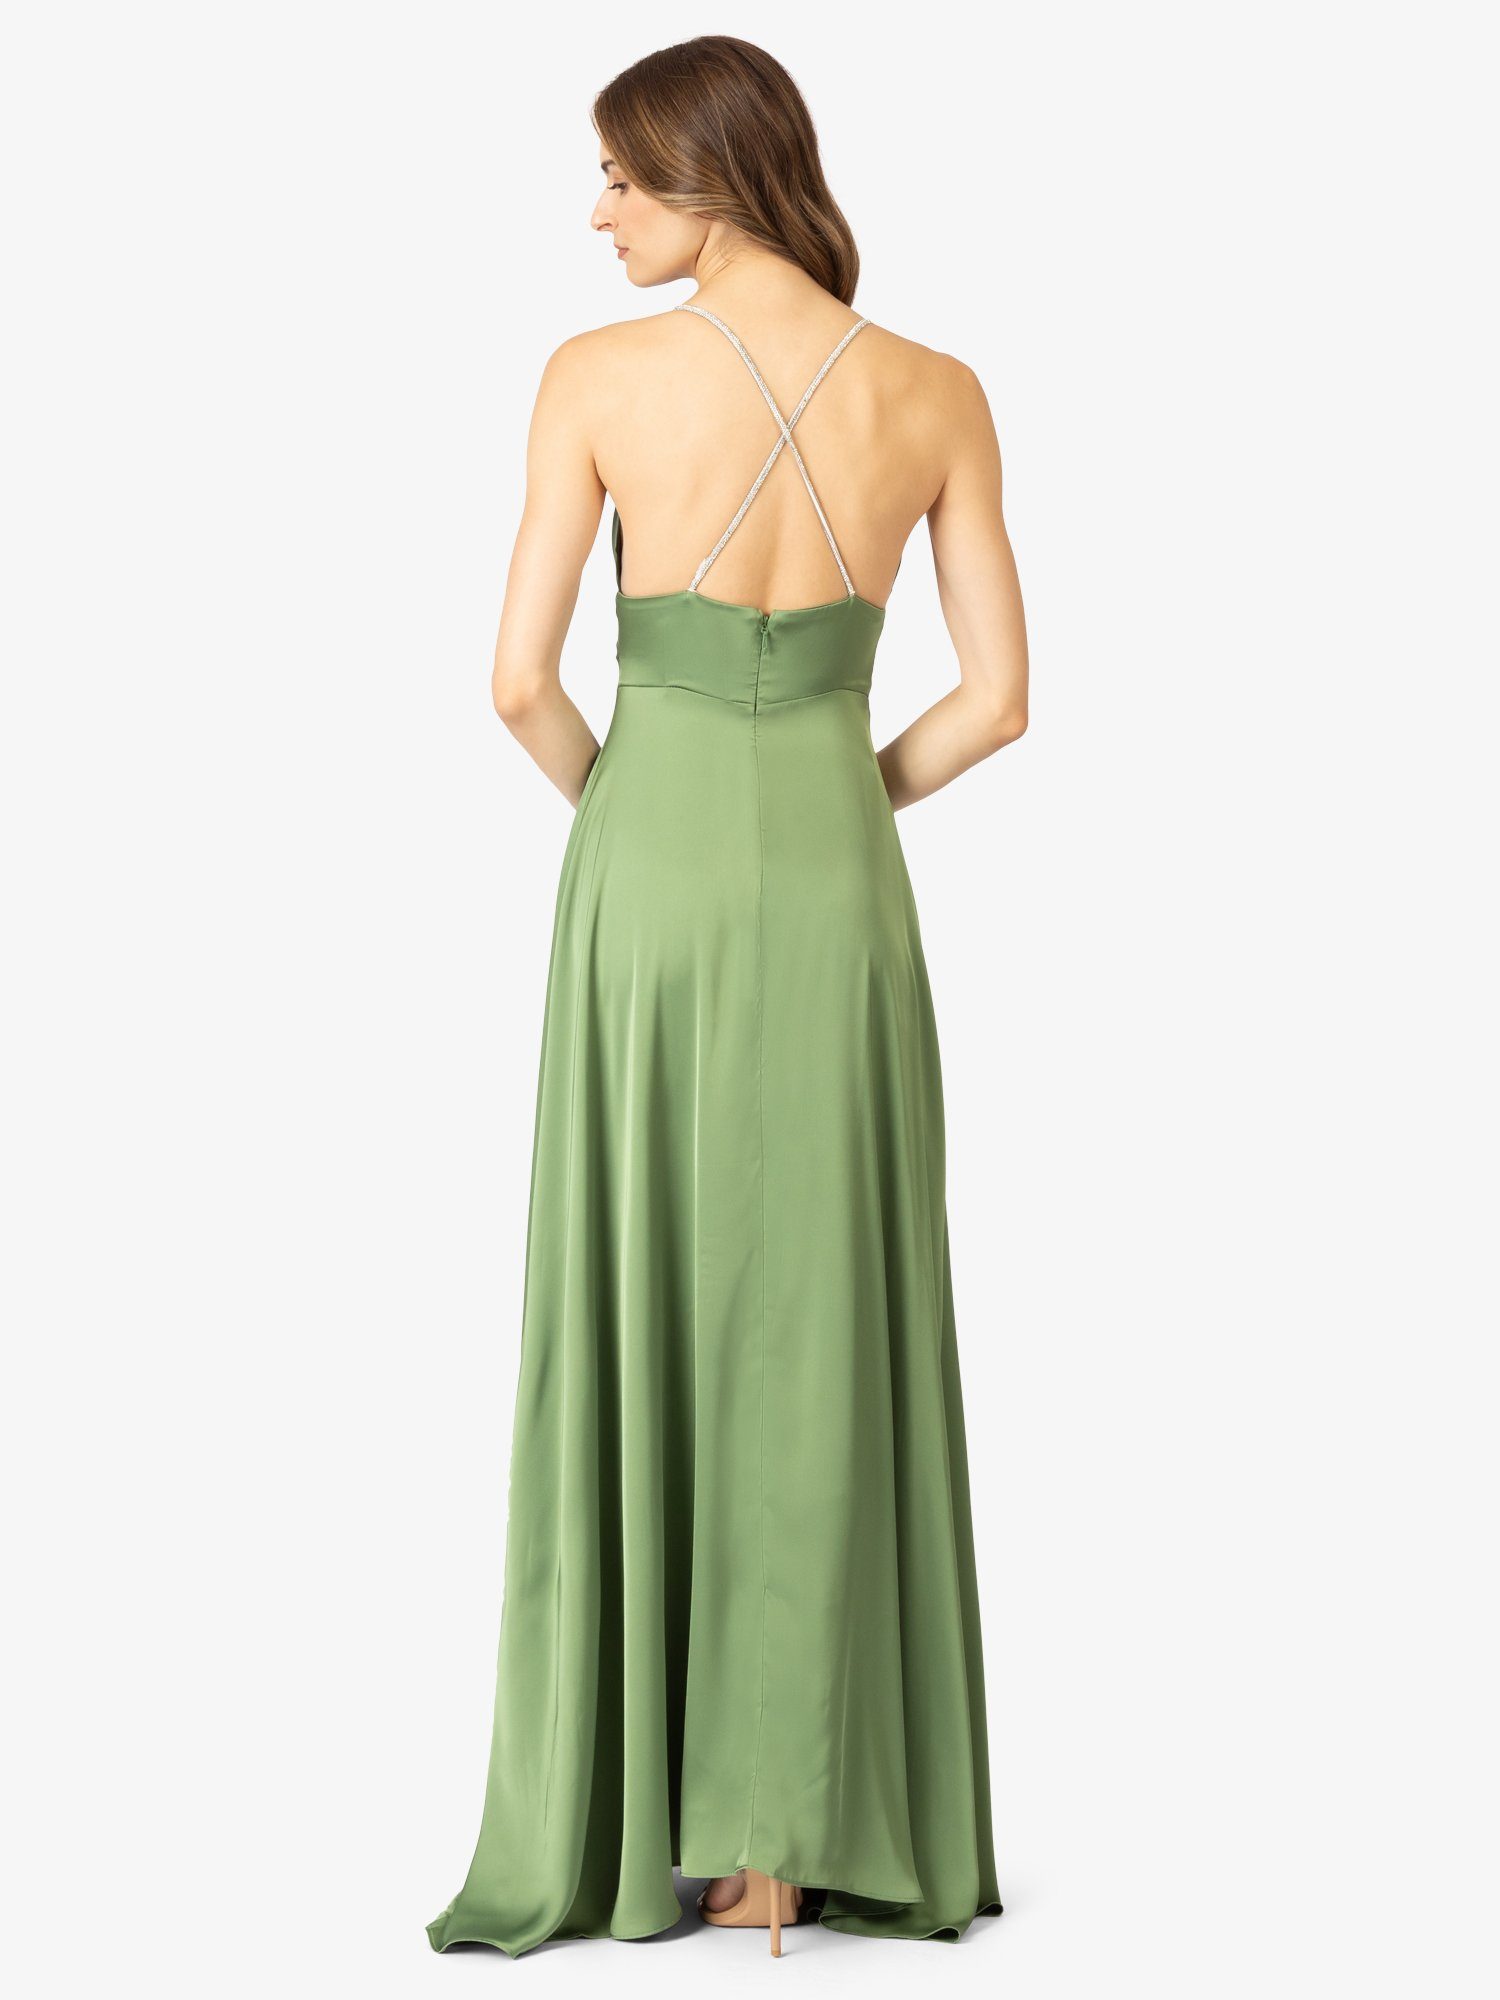 elegantem mit Stil Abendkleid hellgrün Apart